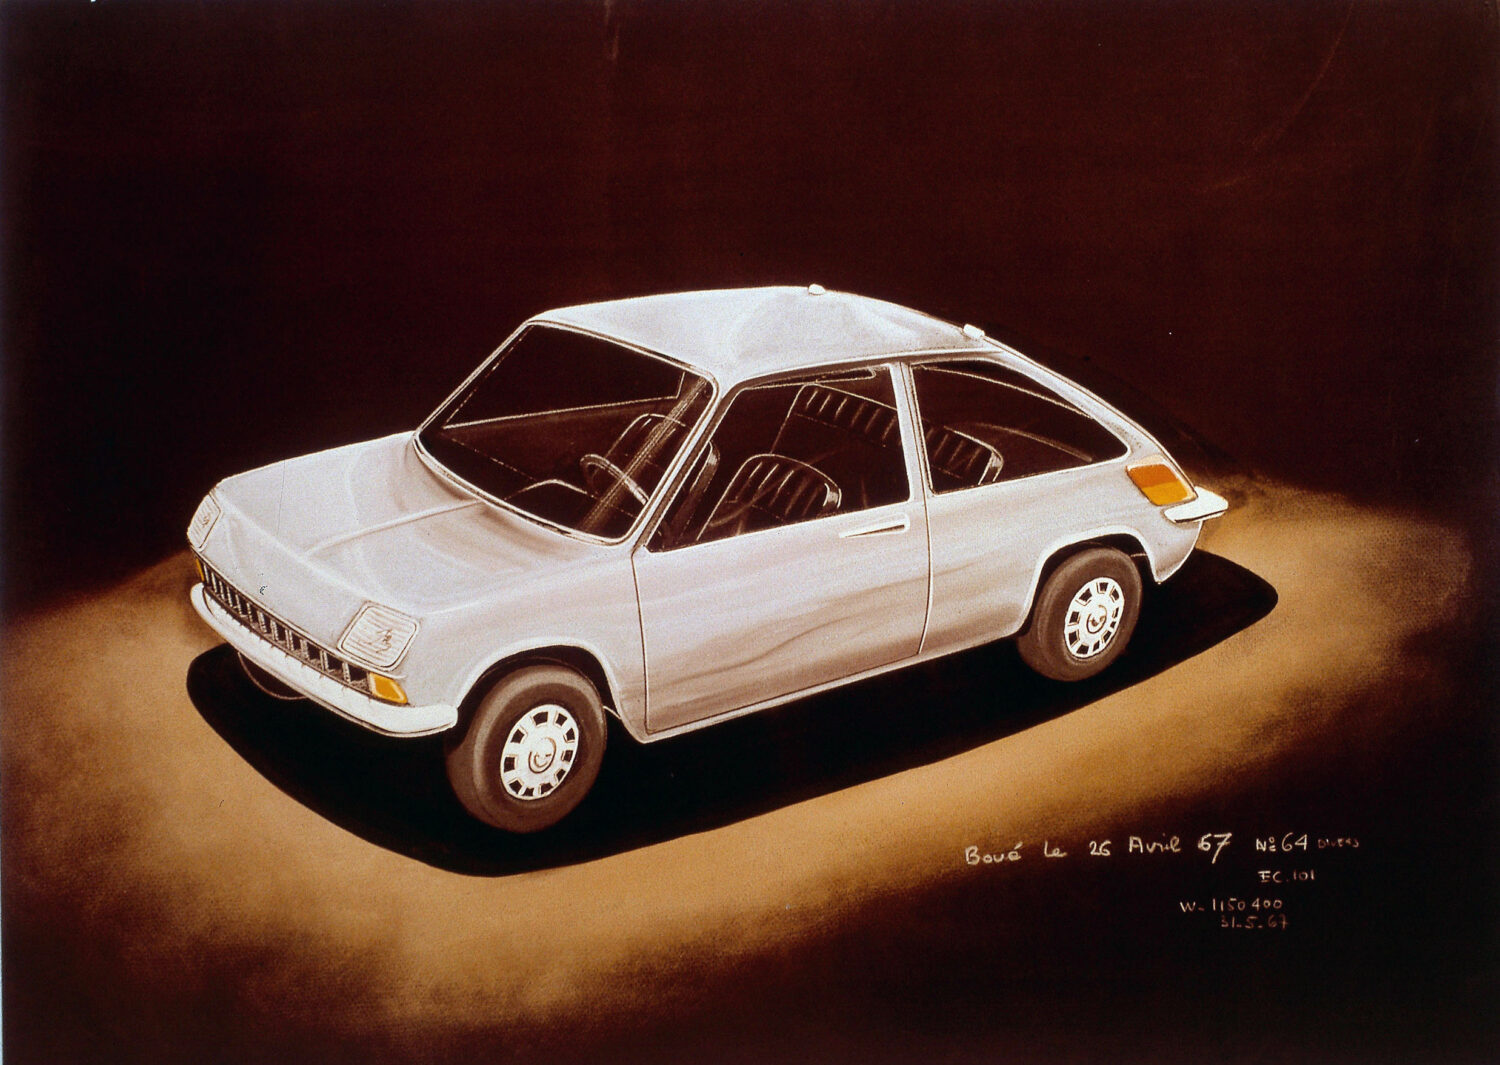 1967 - Renault 5 design study